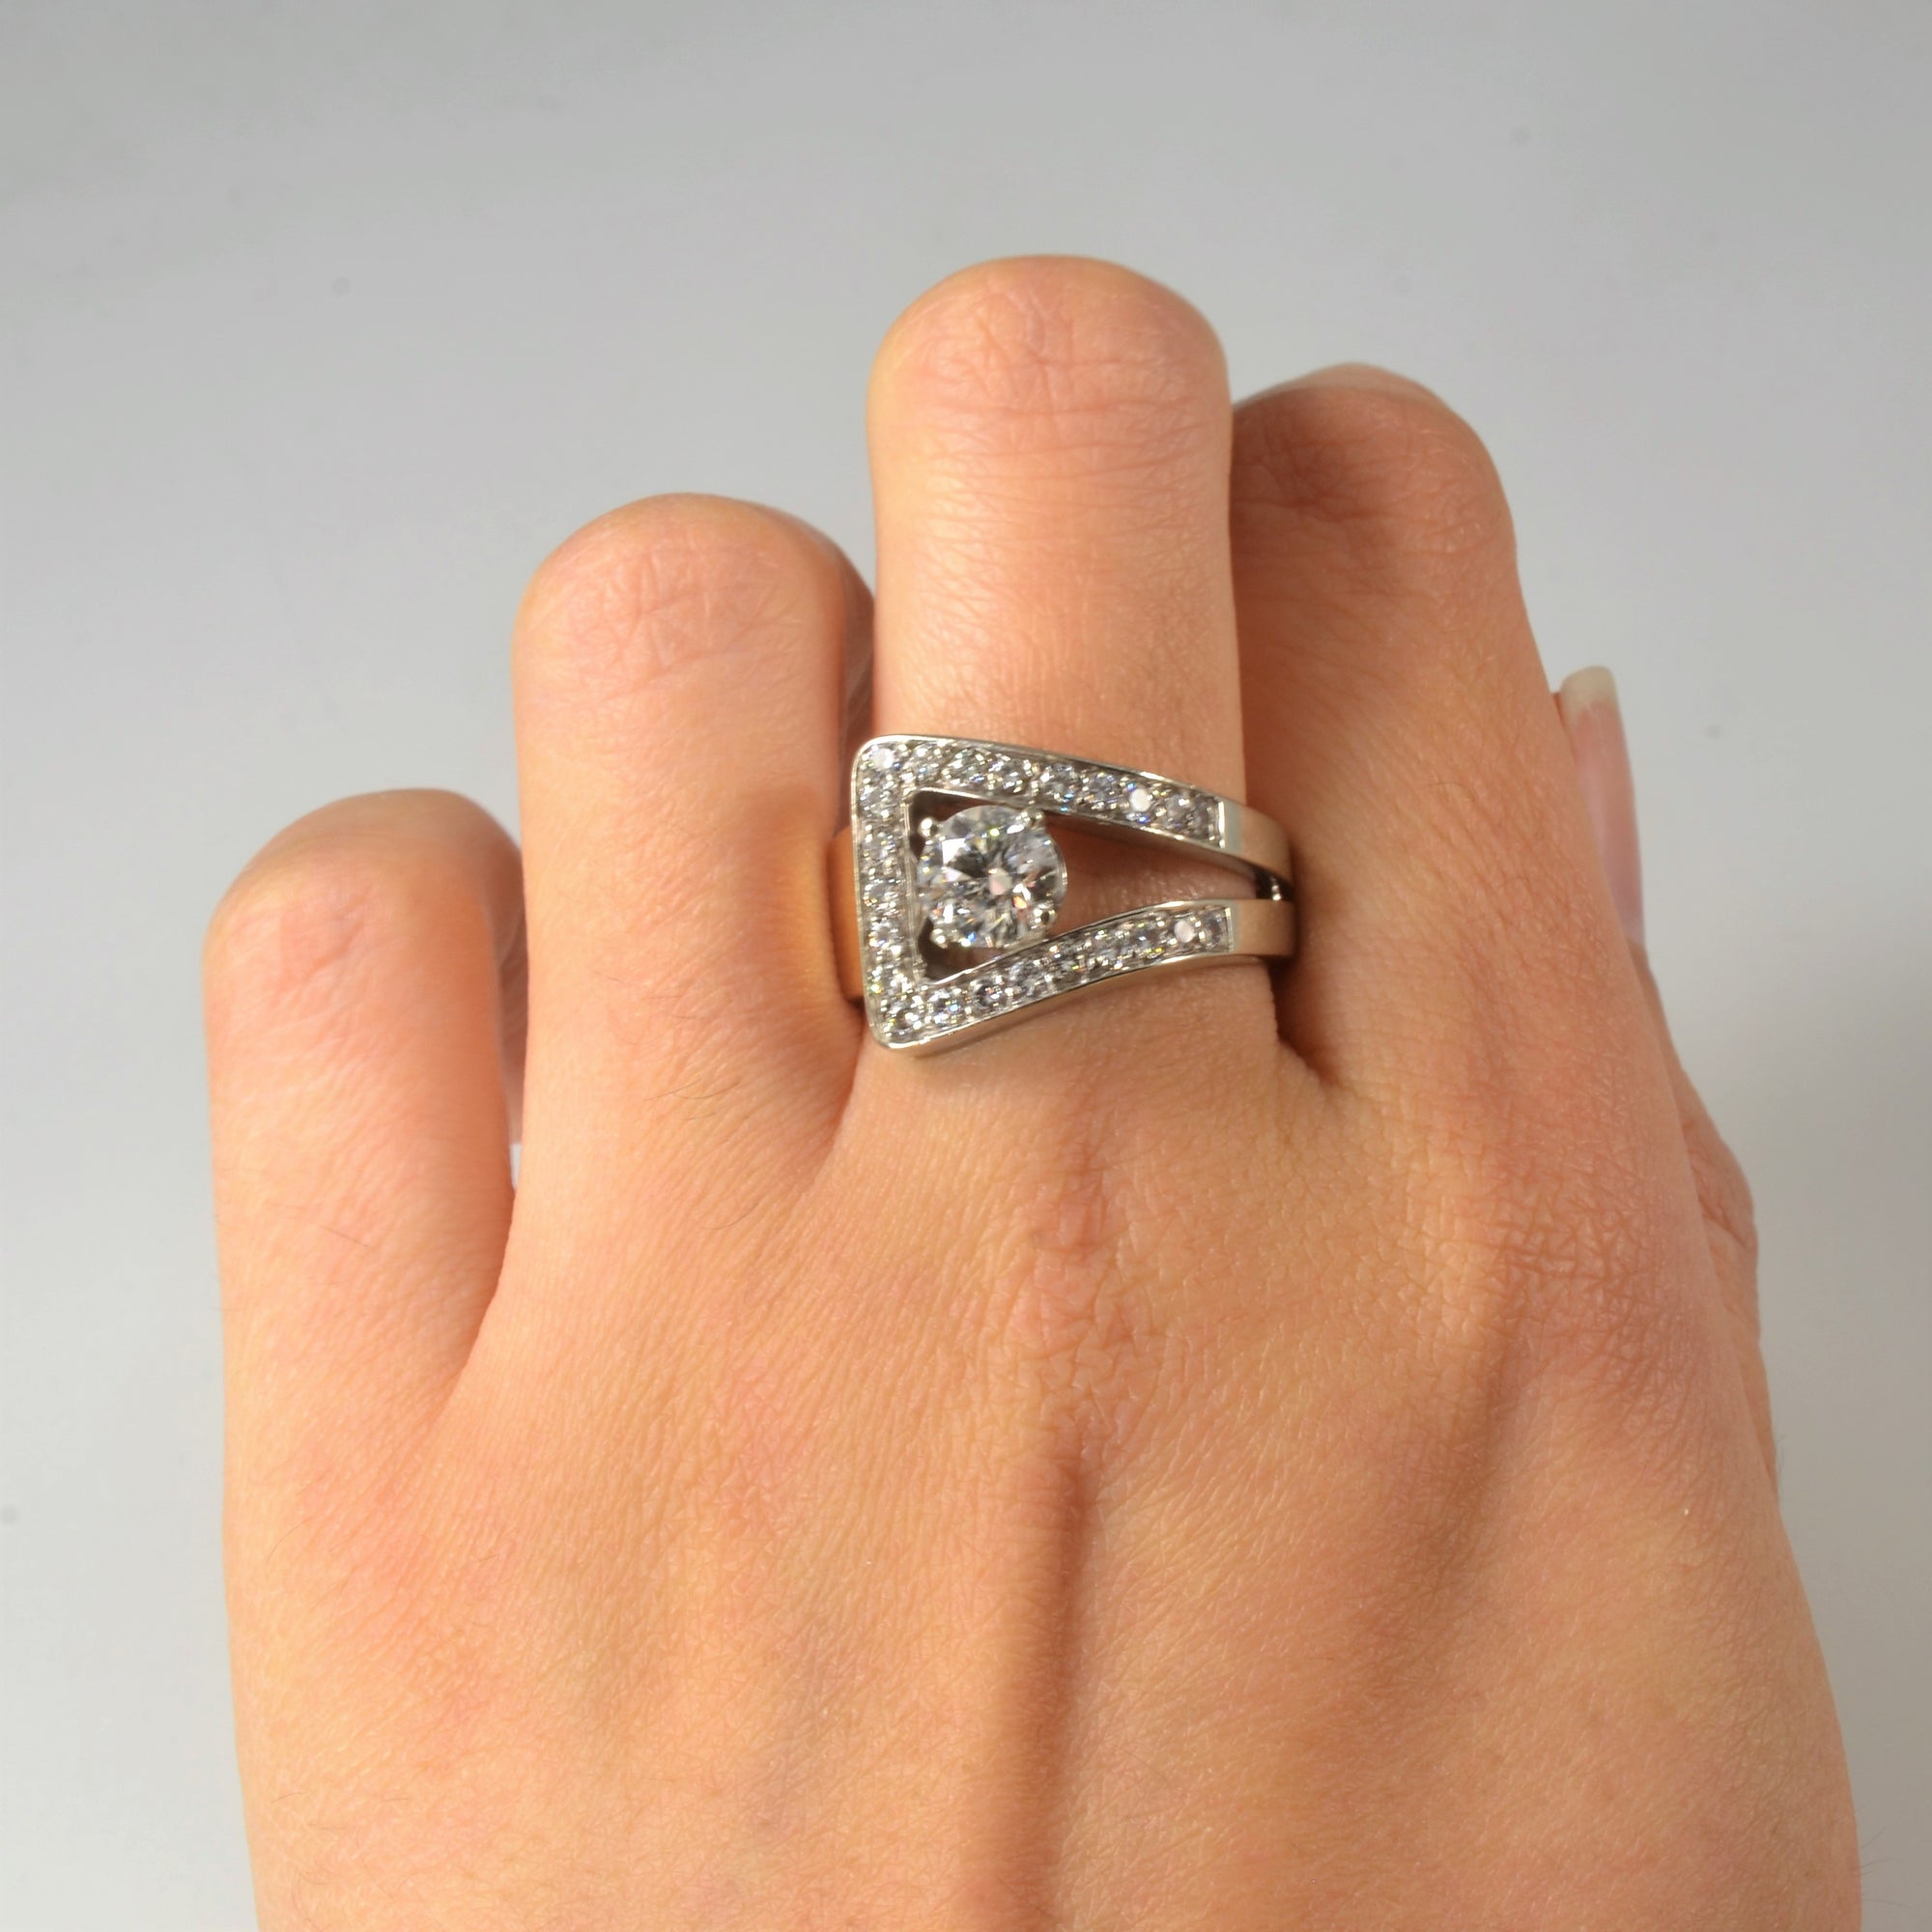 Buckle Style Diamond Ring | 1.46ctw | SZ 8.75 |